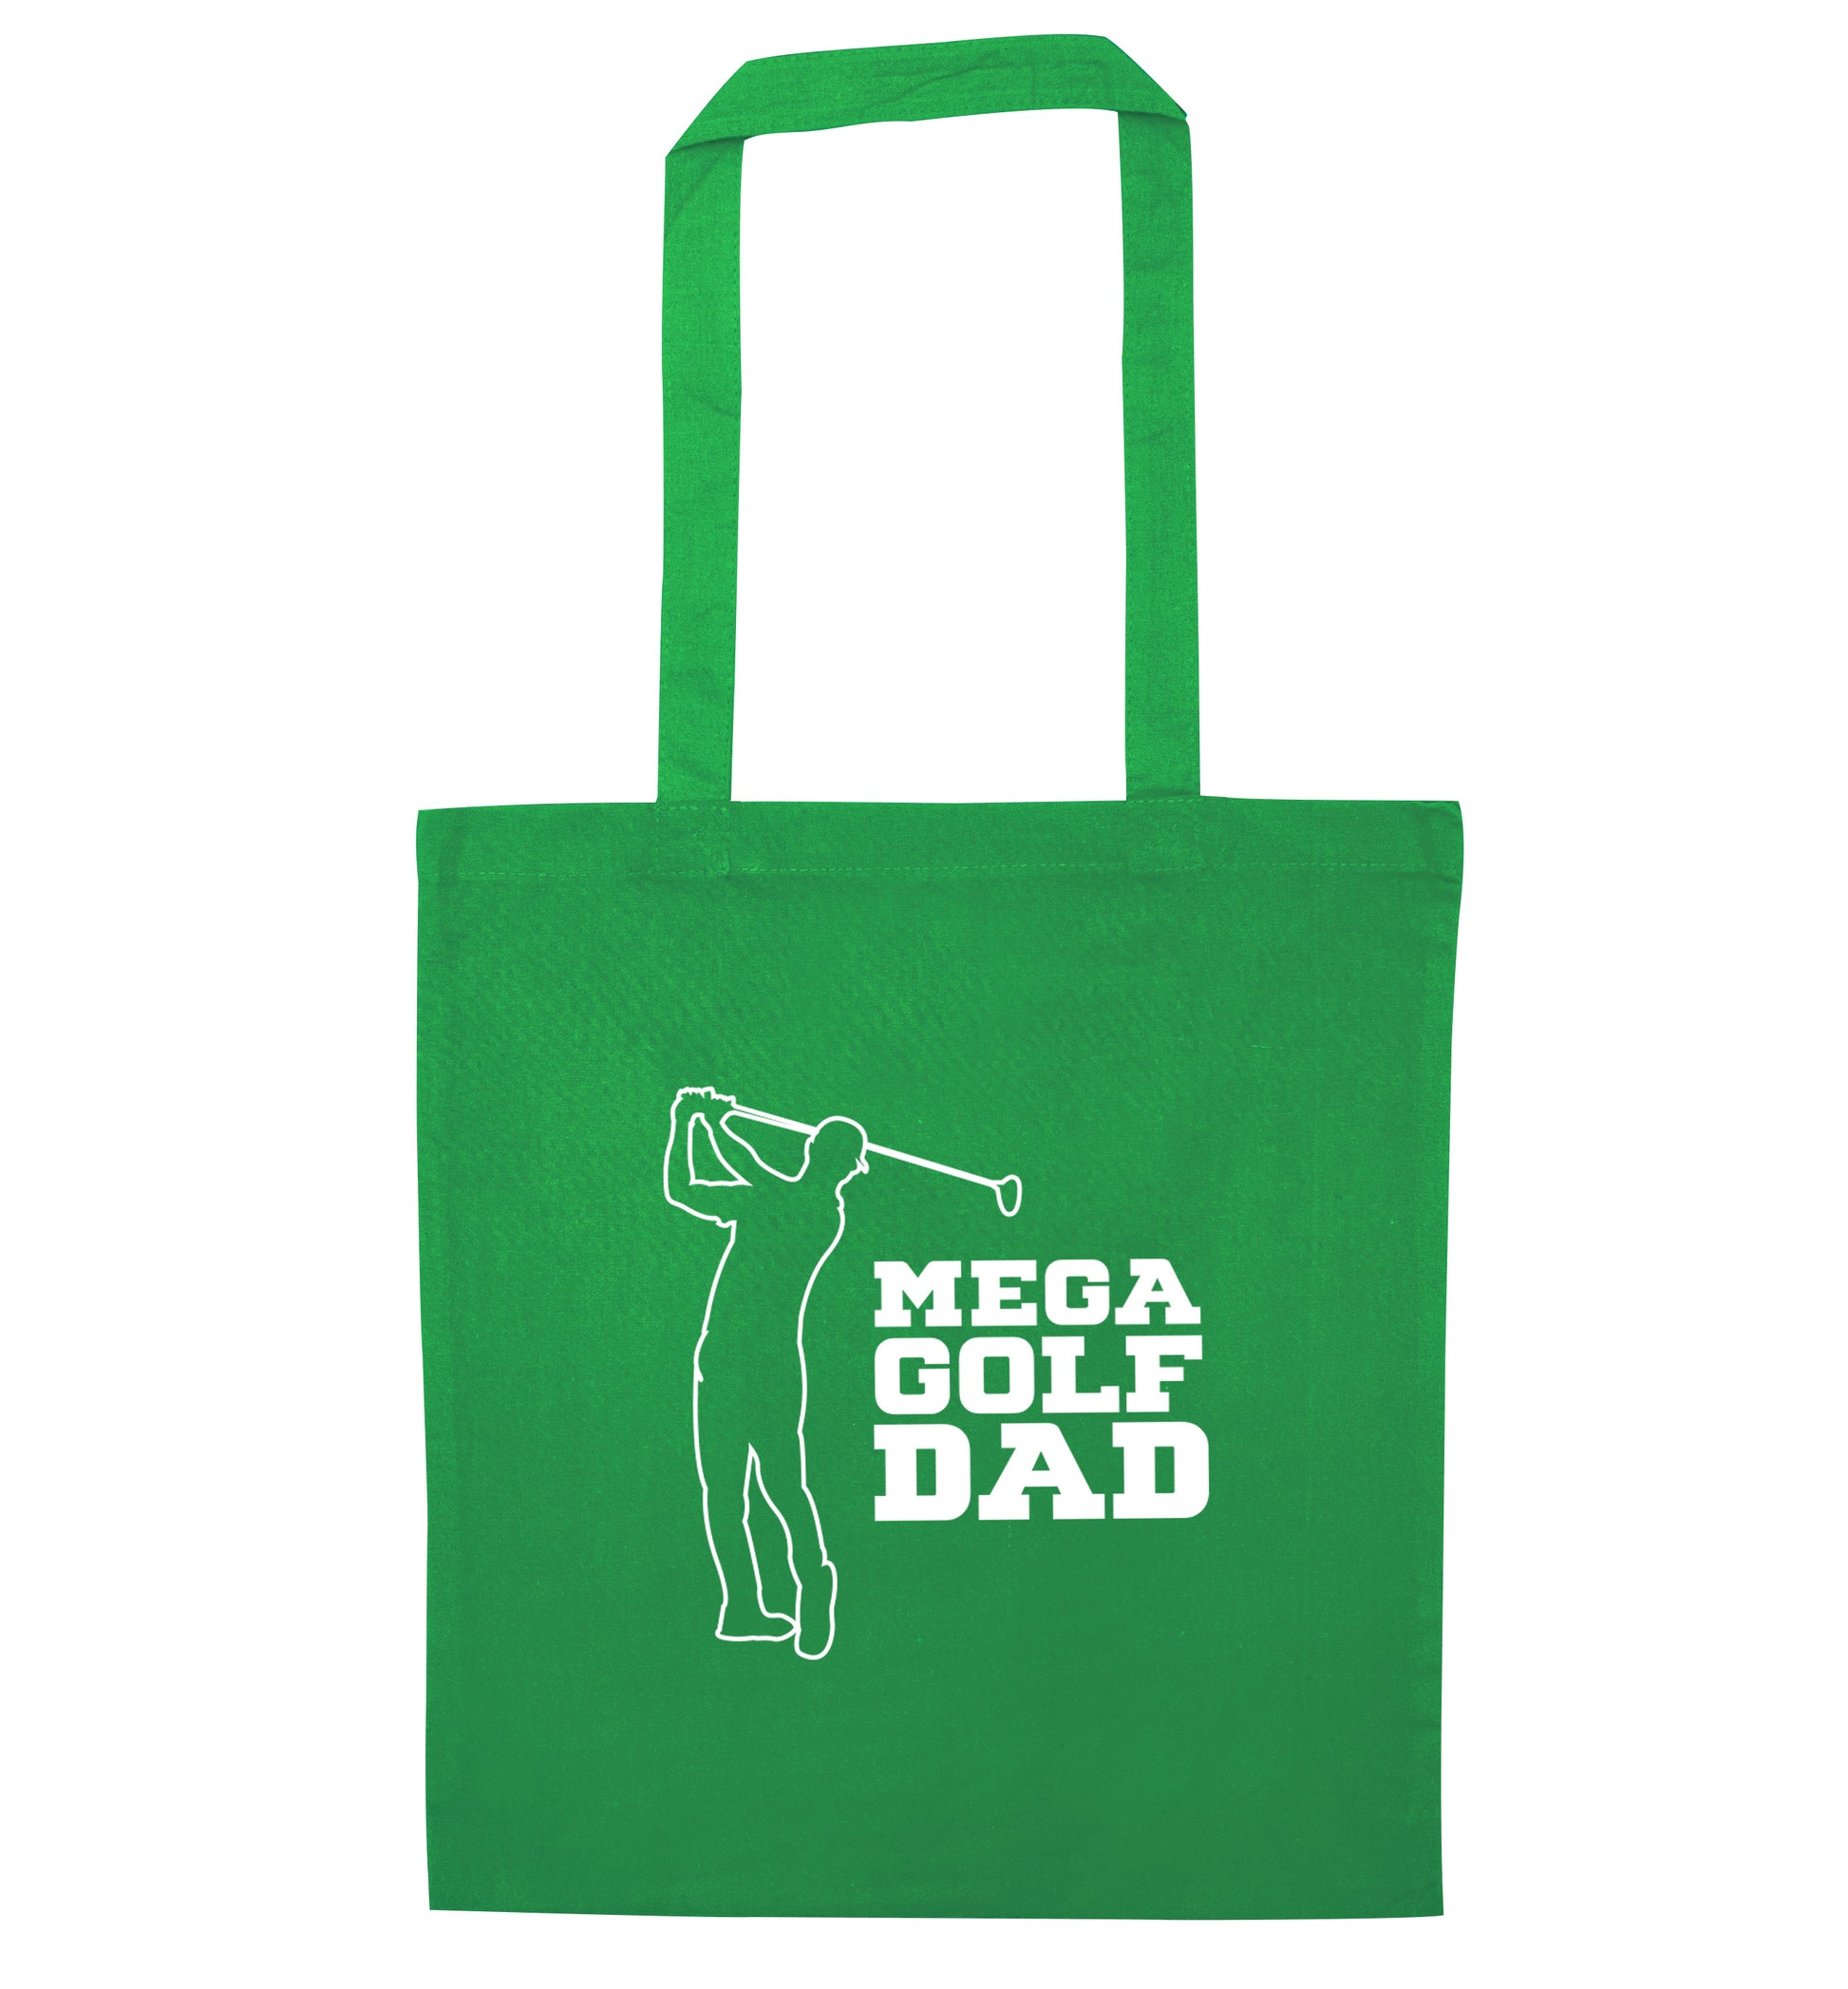 Mega golfing dad green tote bag